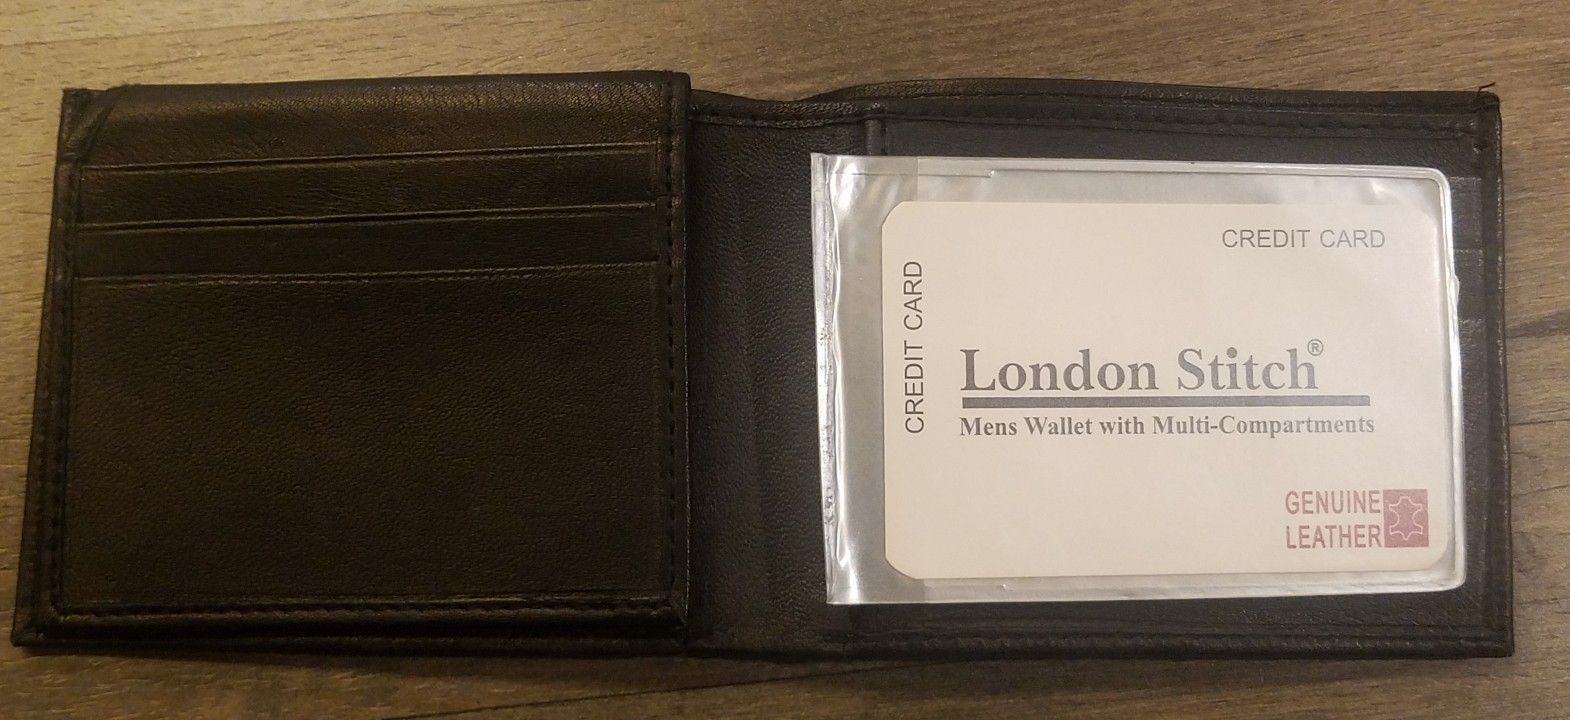 London stitch mens wallet